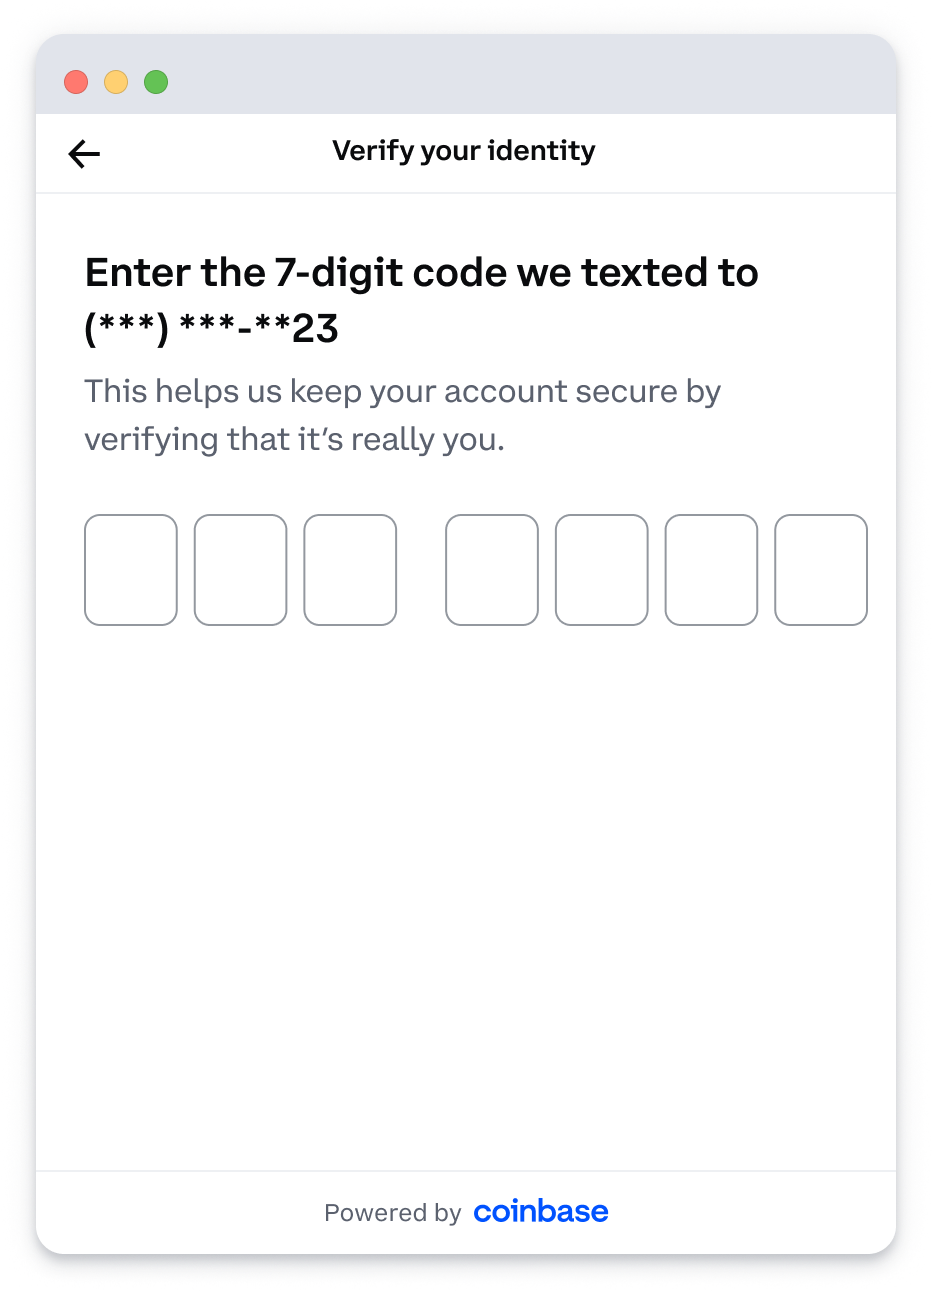 Go through 2FA again and enter the 7-digit code.